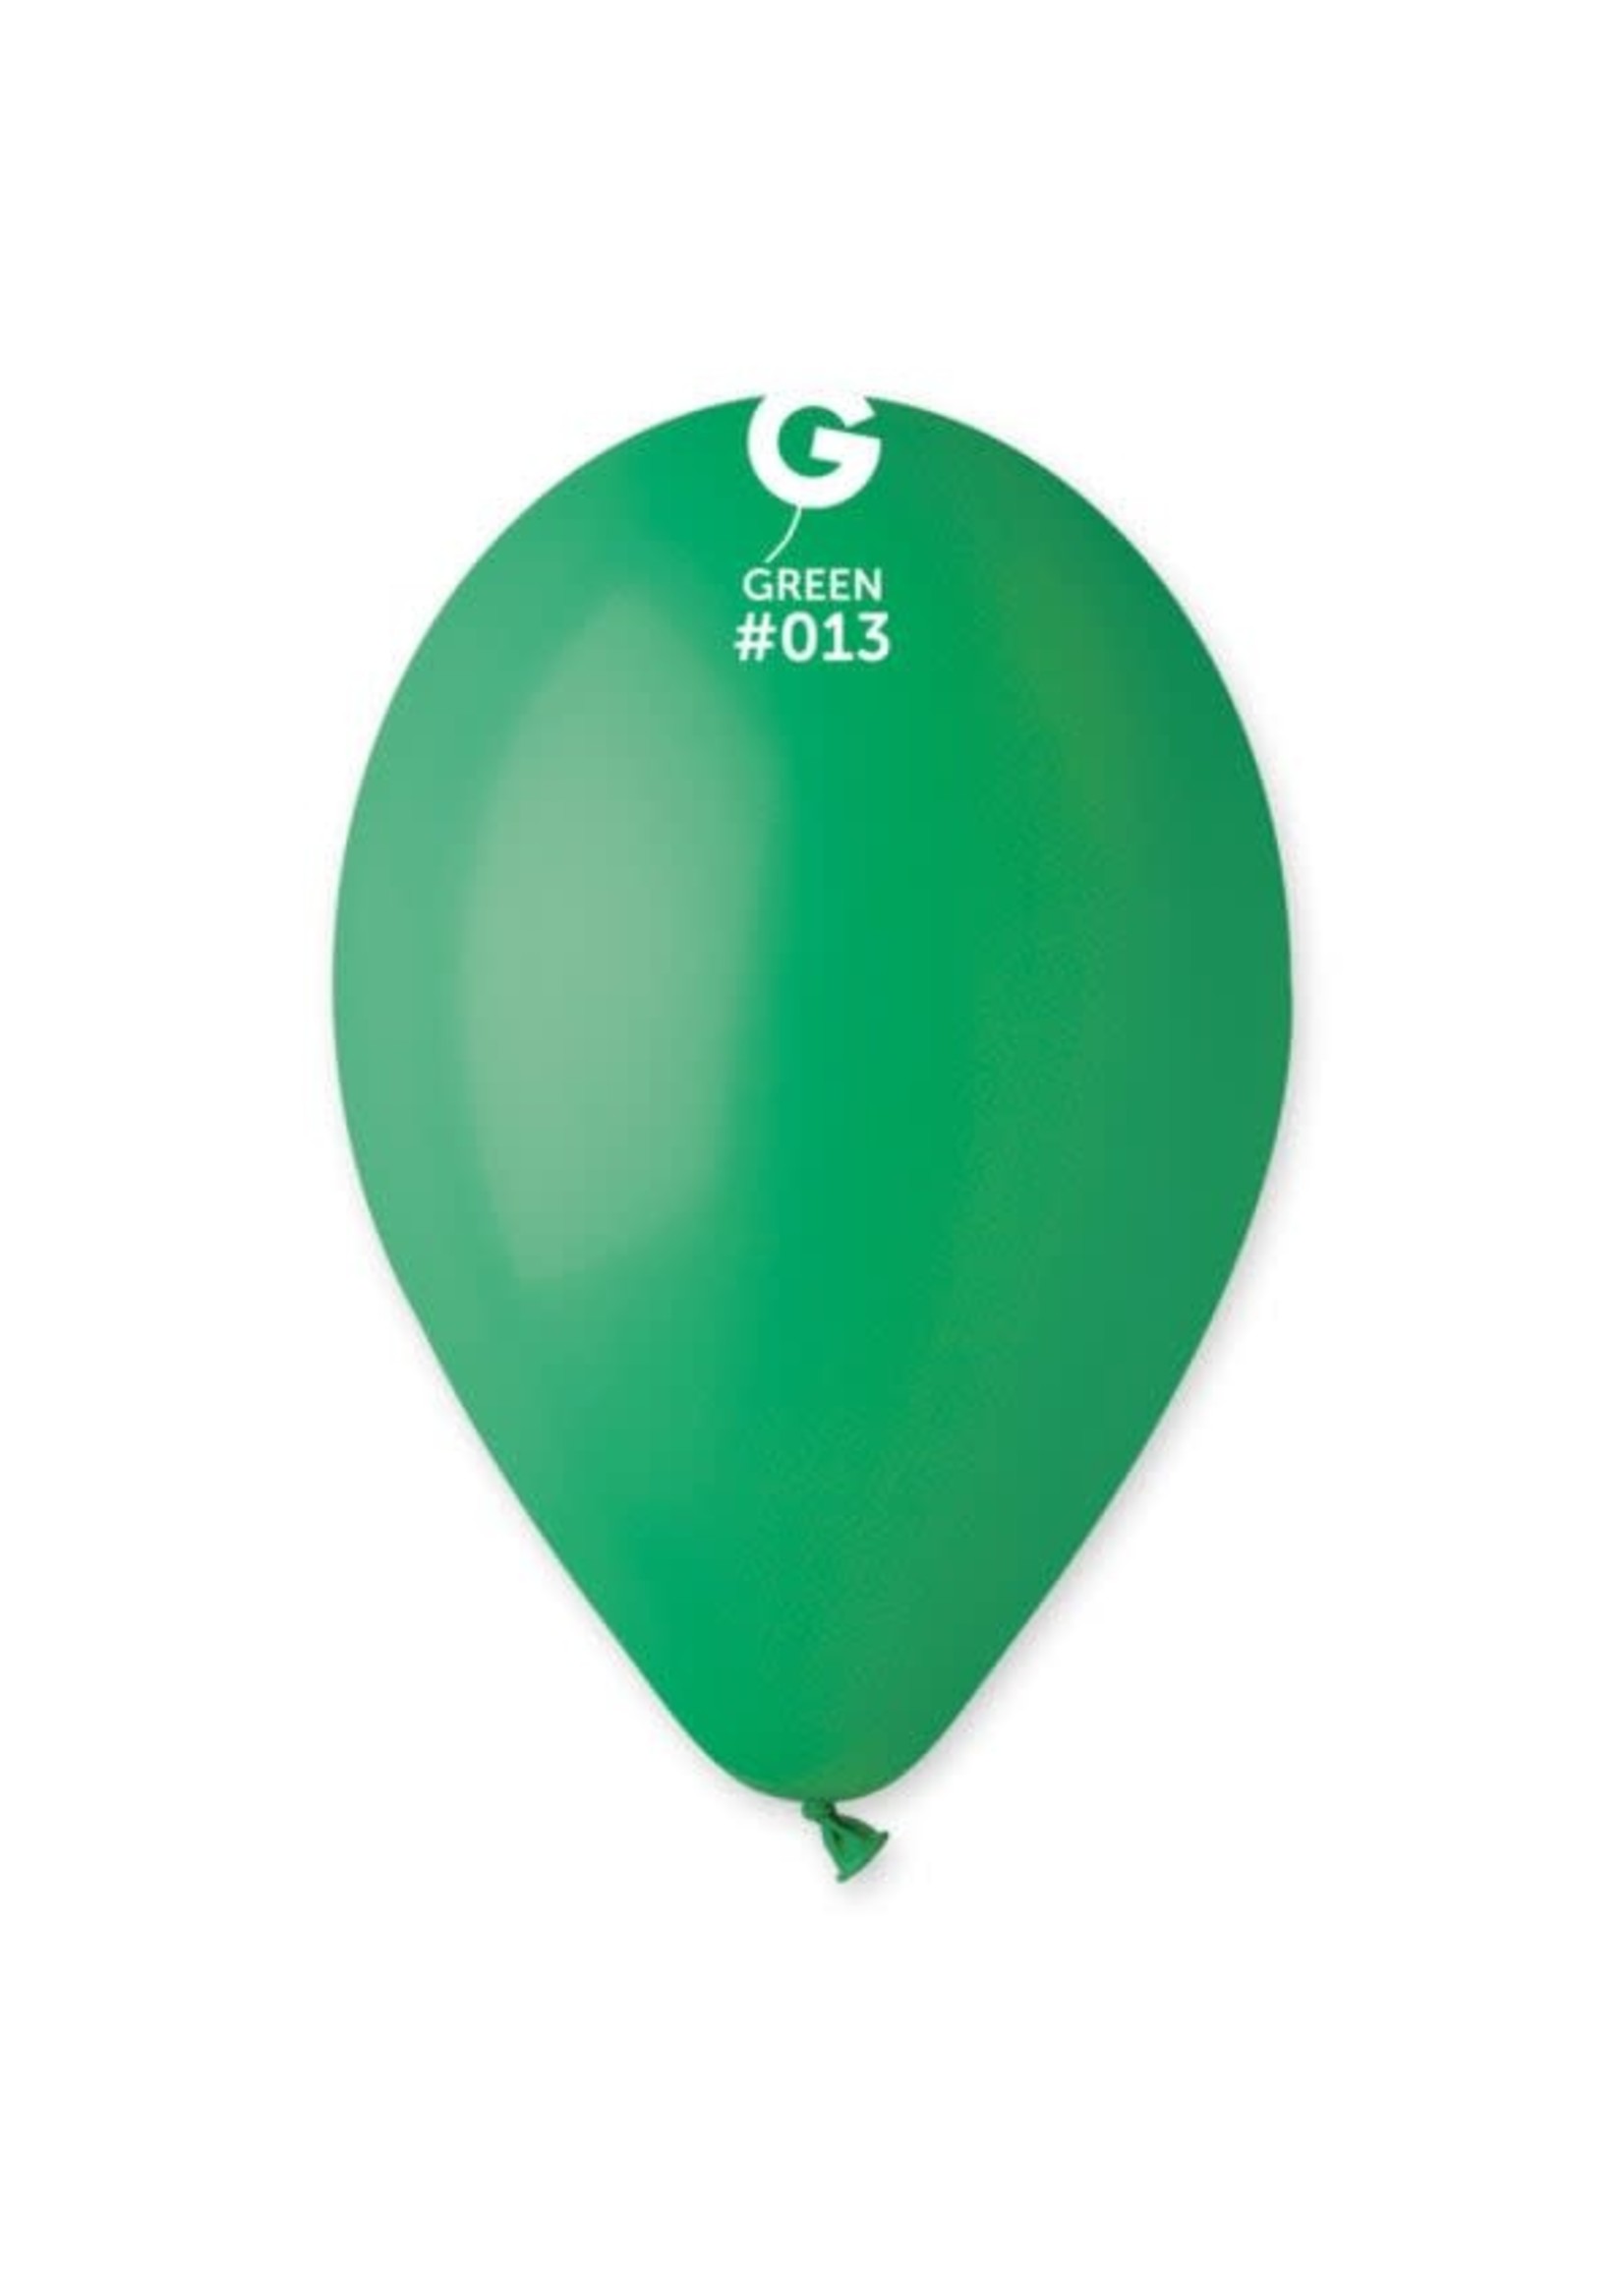 GEMAR Green #013 Latex Balloons, 12in, 50ct